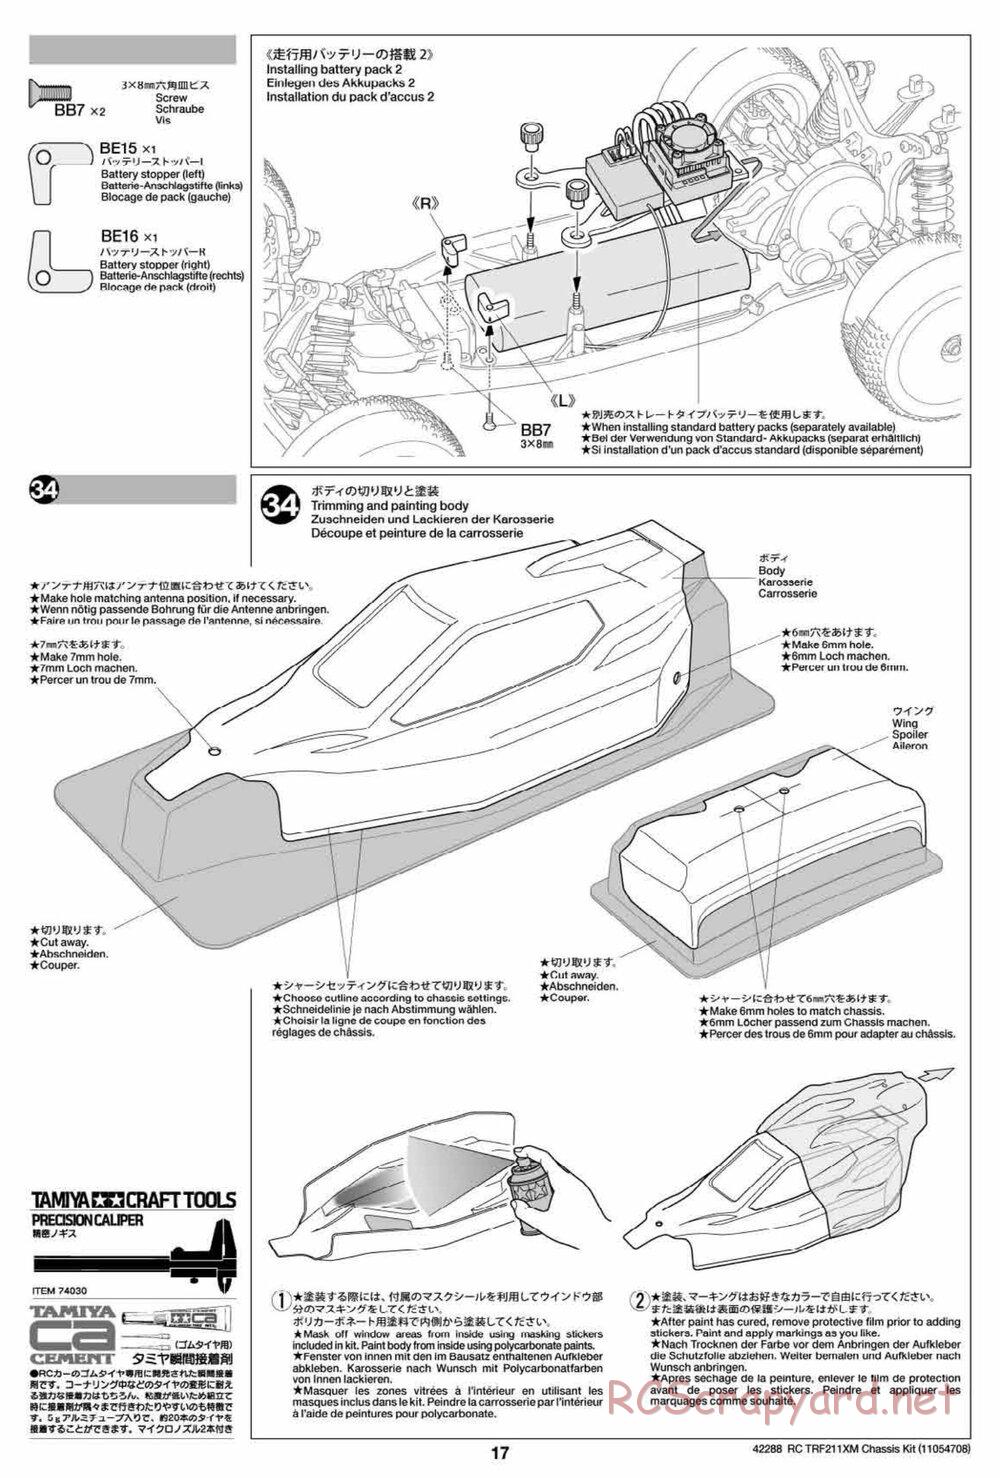 Tamiya - TRF211XM Chassis - Manual - Page 17